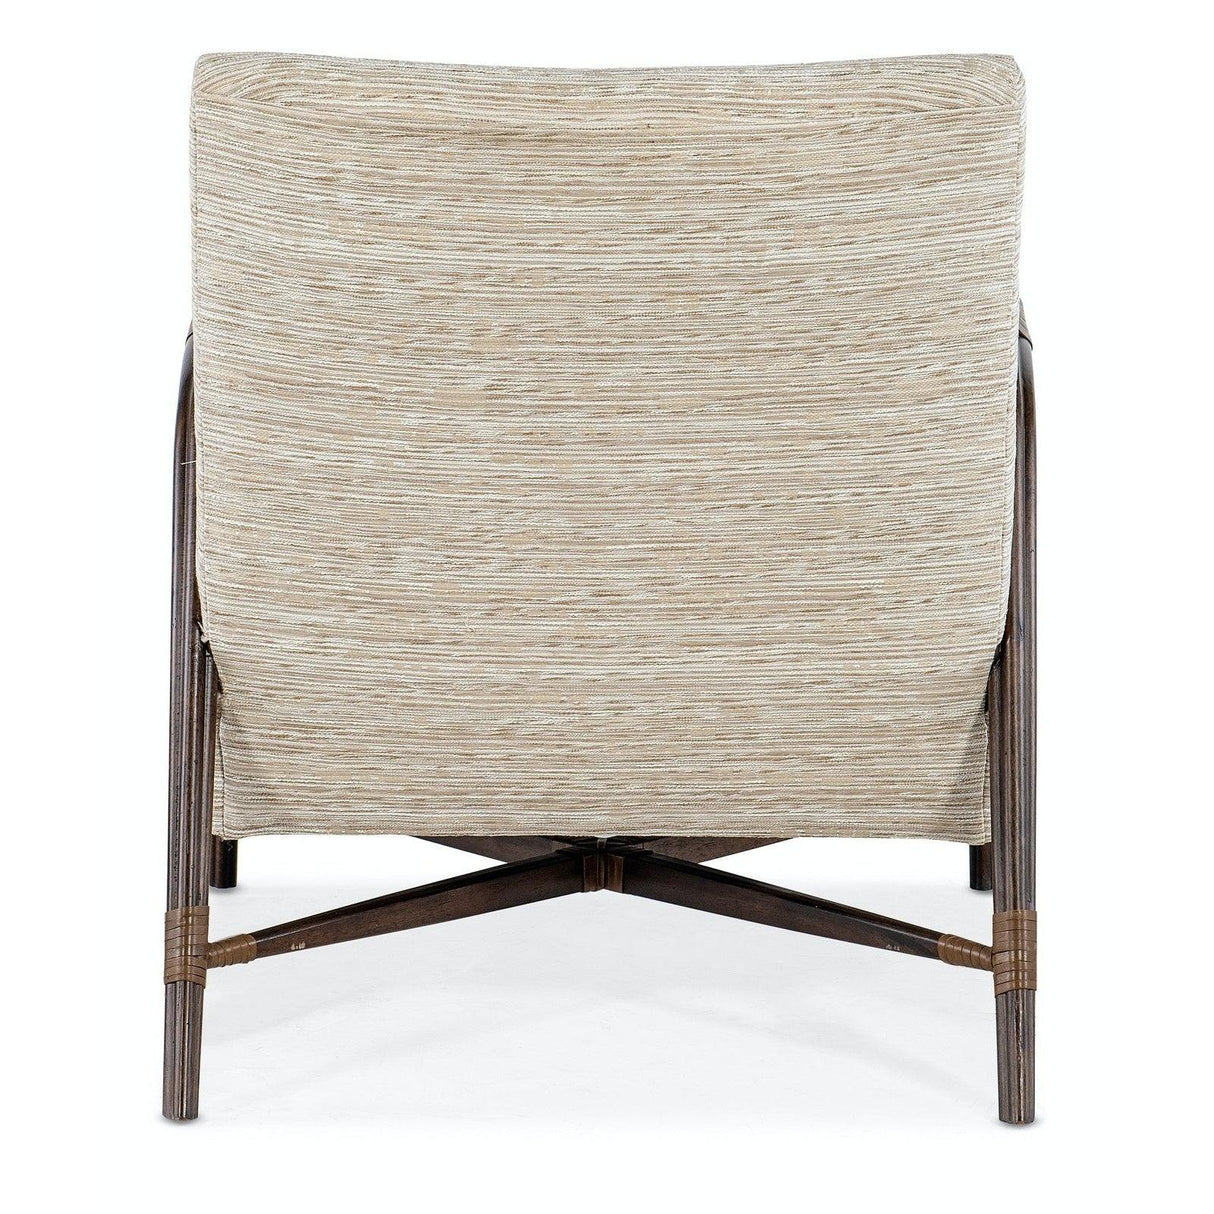 Hooker Furniture Granada Lounge Chair